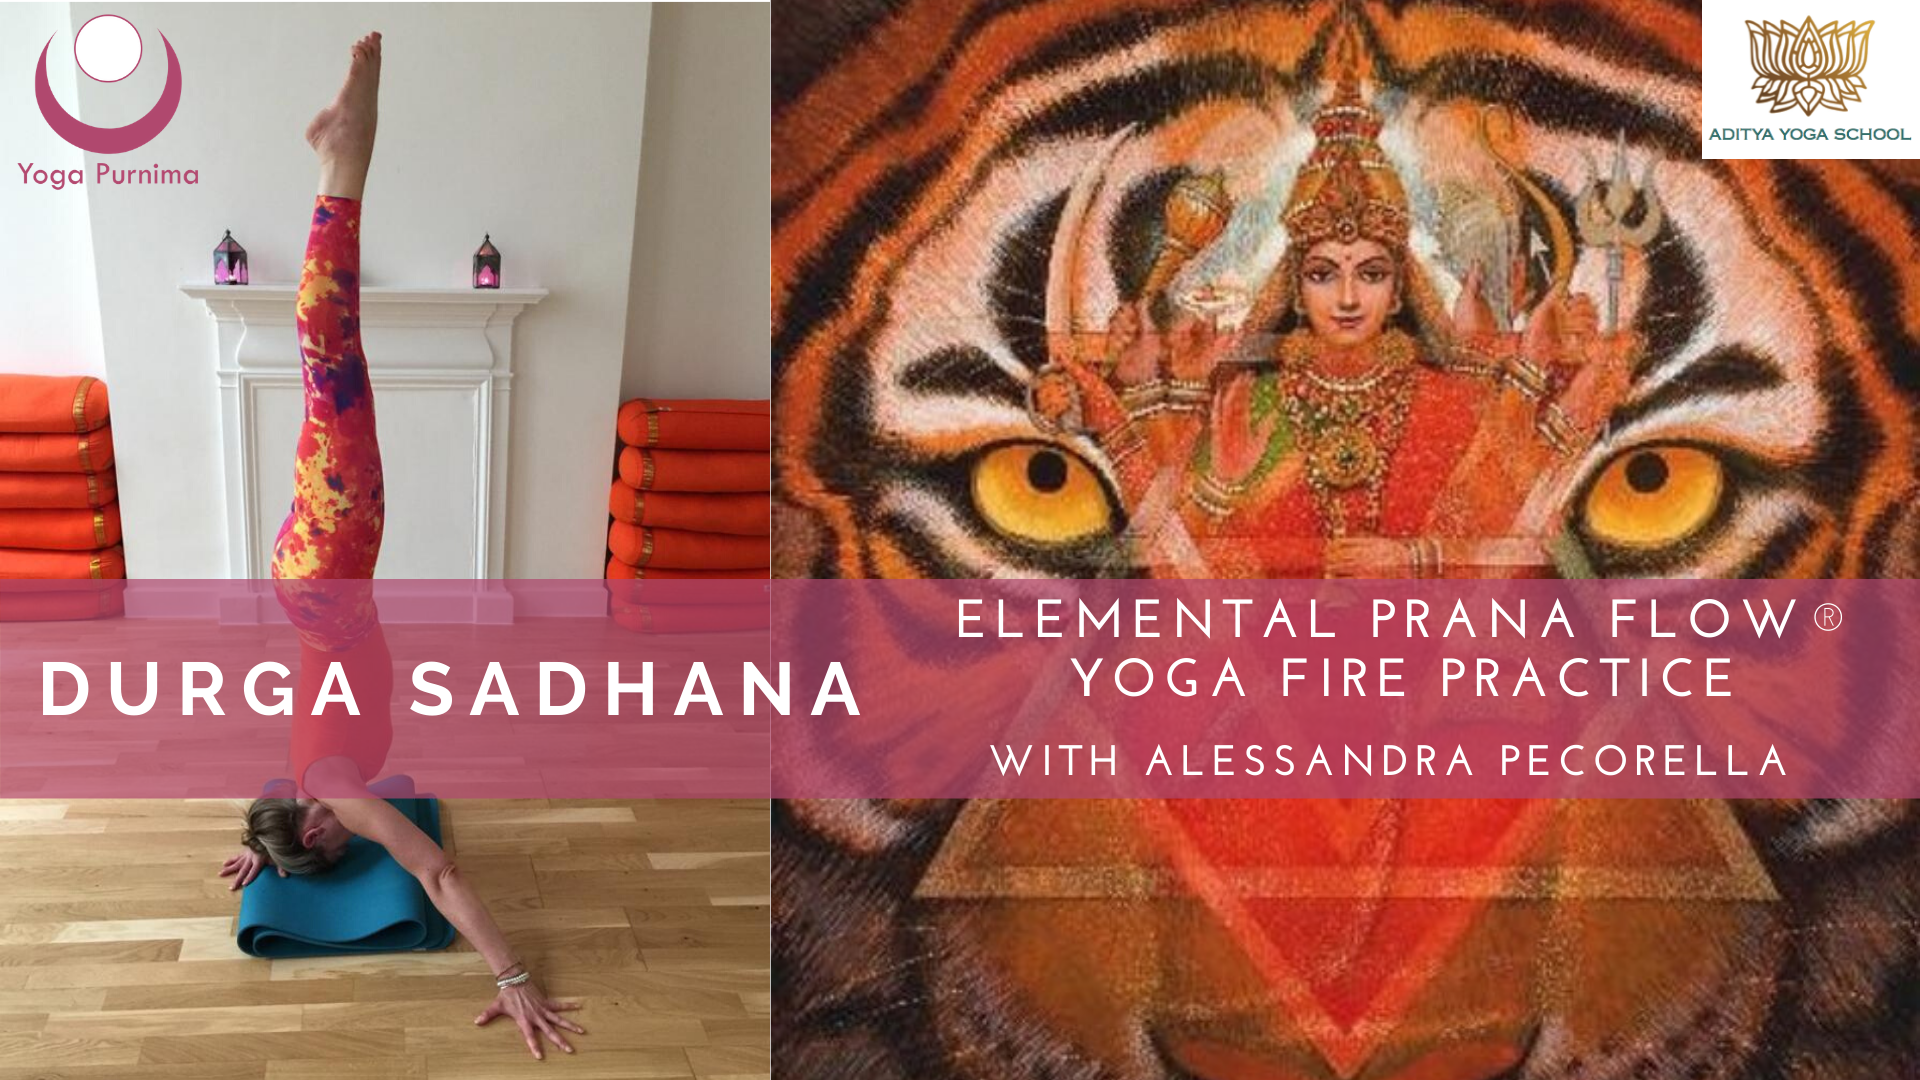 28 e 29 marzo: Durga Sadhana, Prana Flow® workshops con Alessandra Pecorella